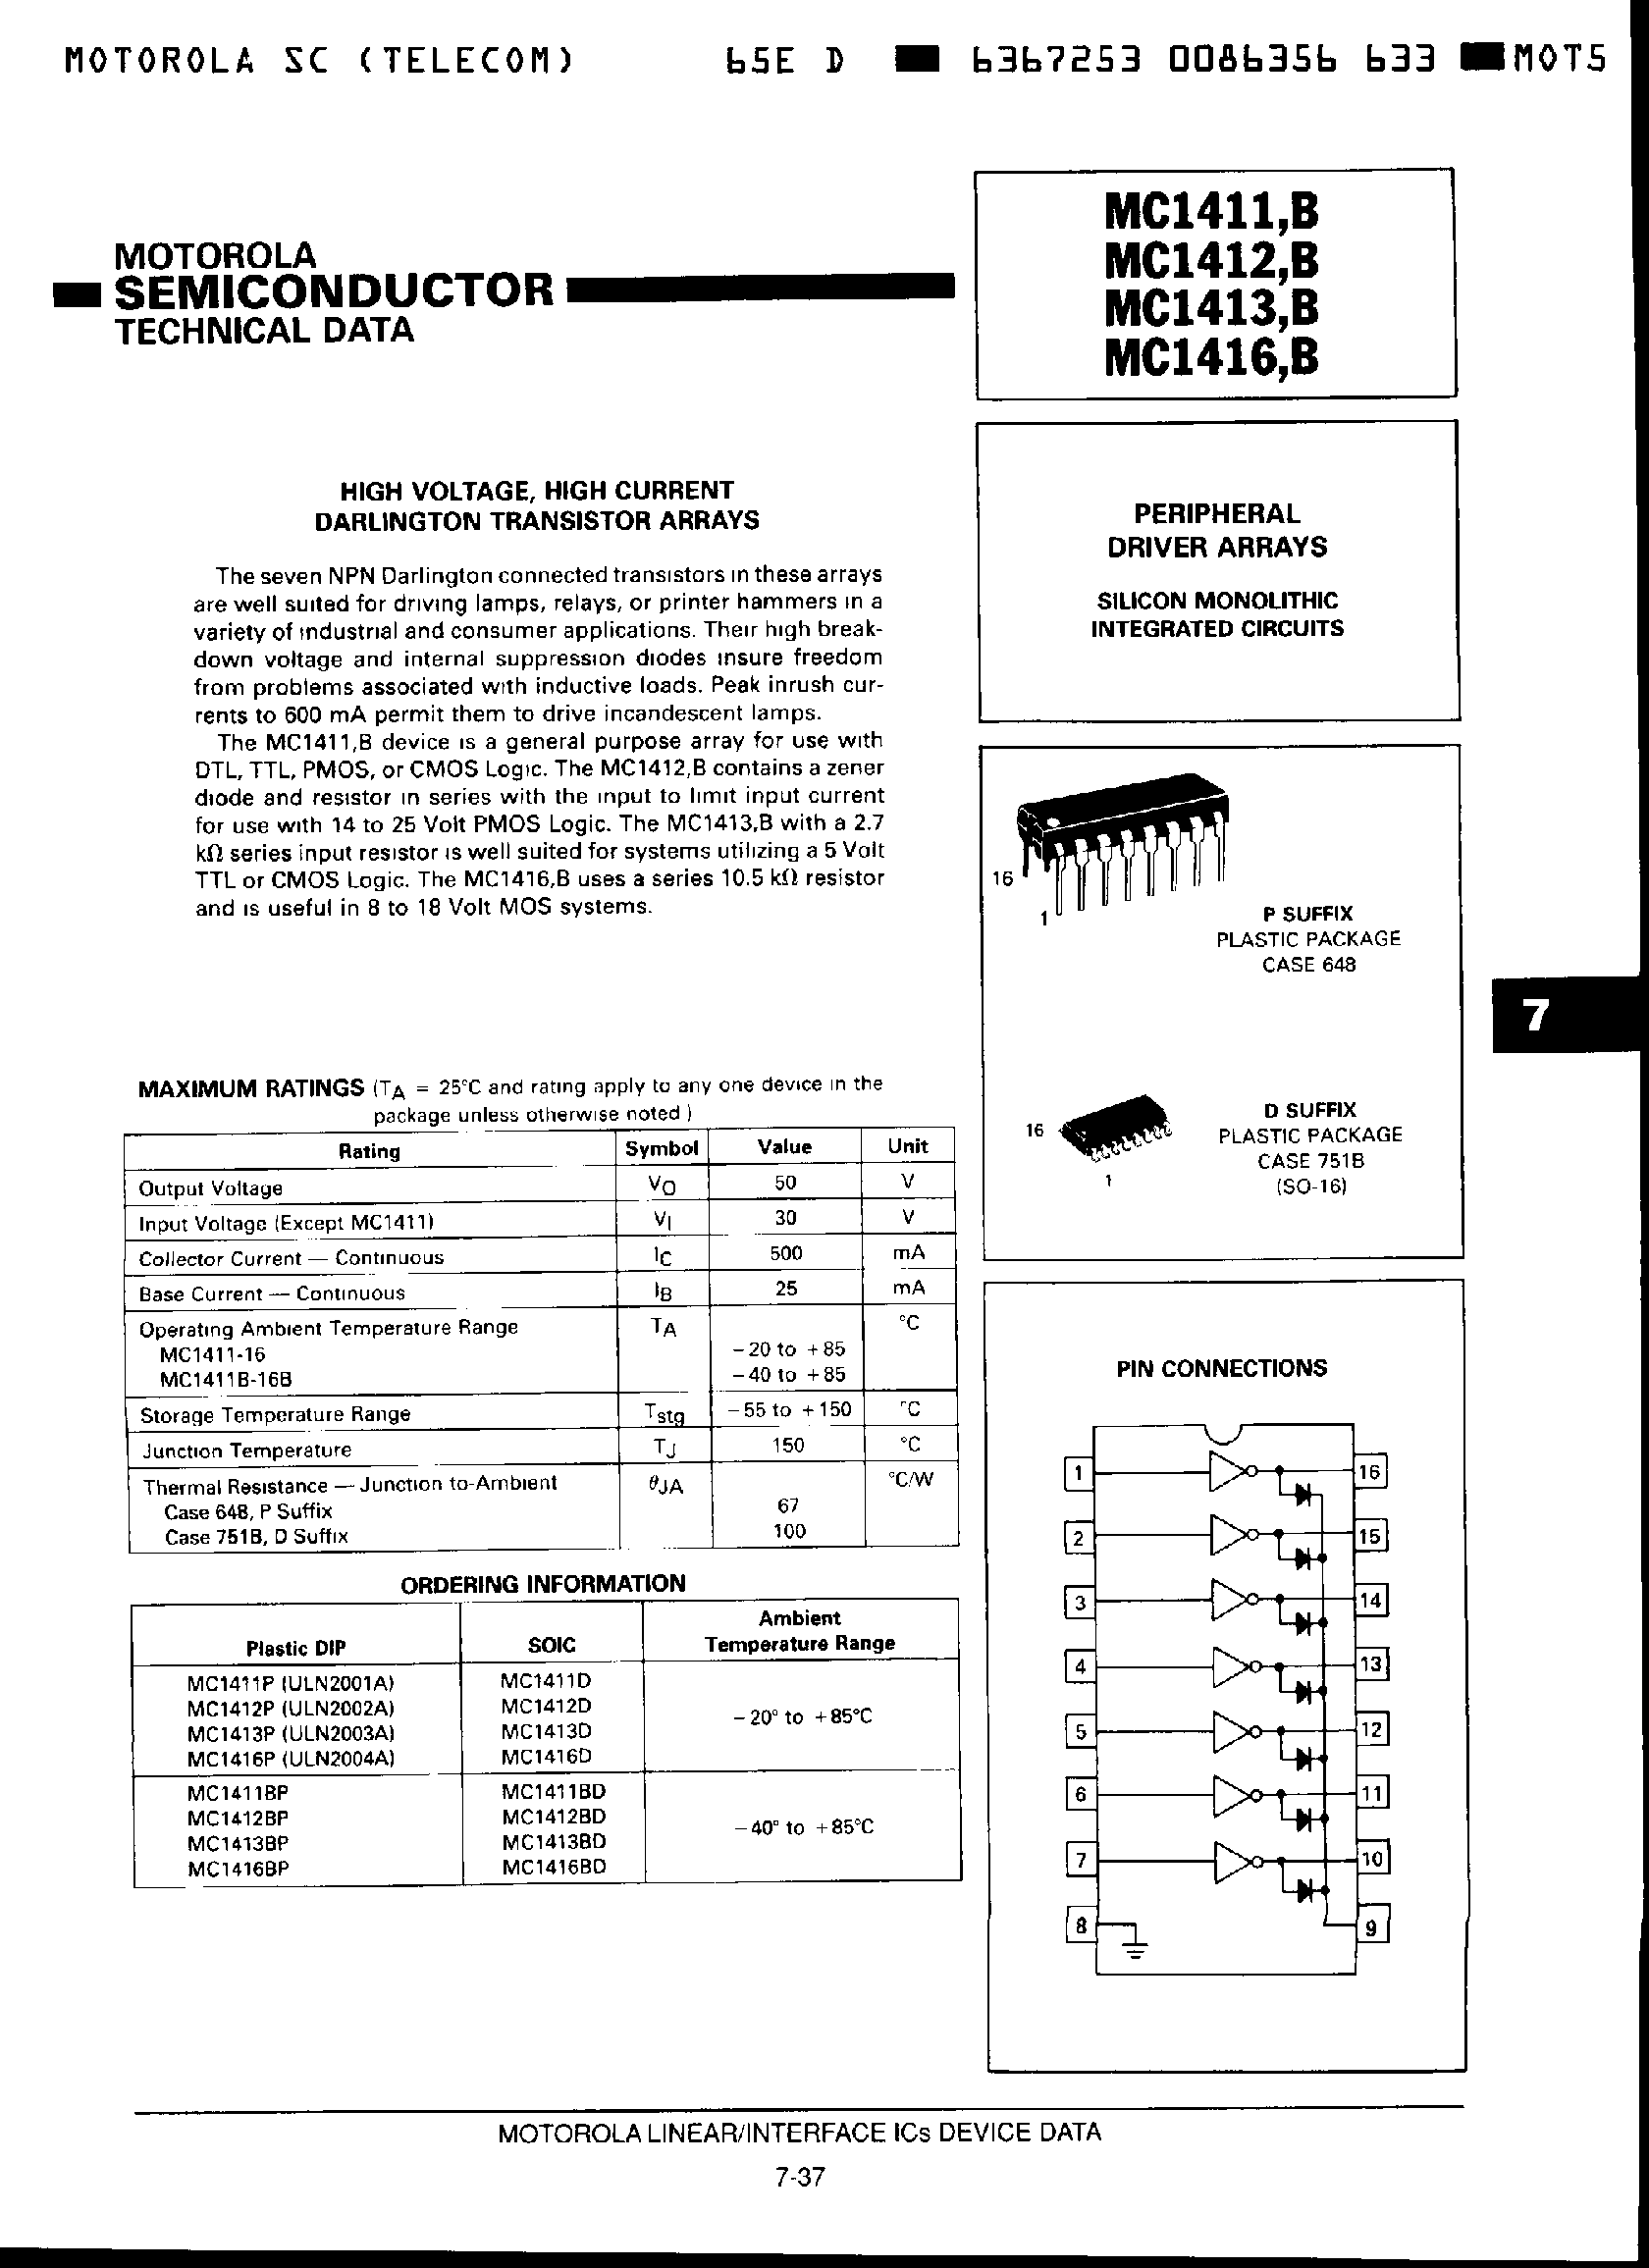 Datasheet MC1413P - PERIPHERAL DRIVER ARRAYS page 1